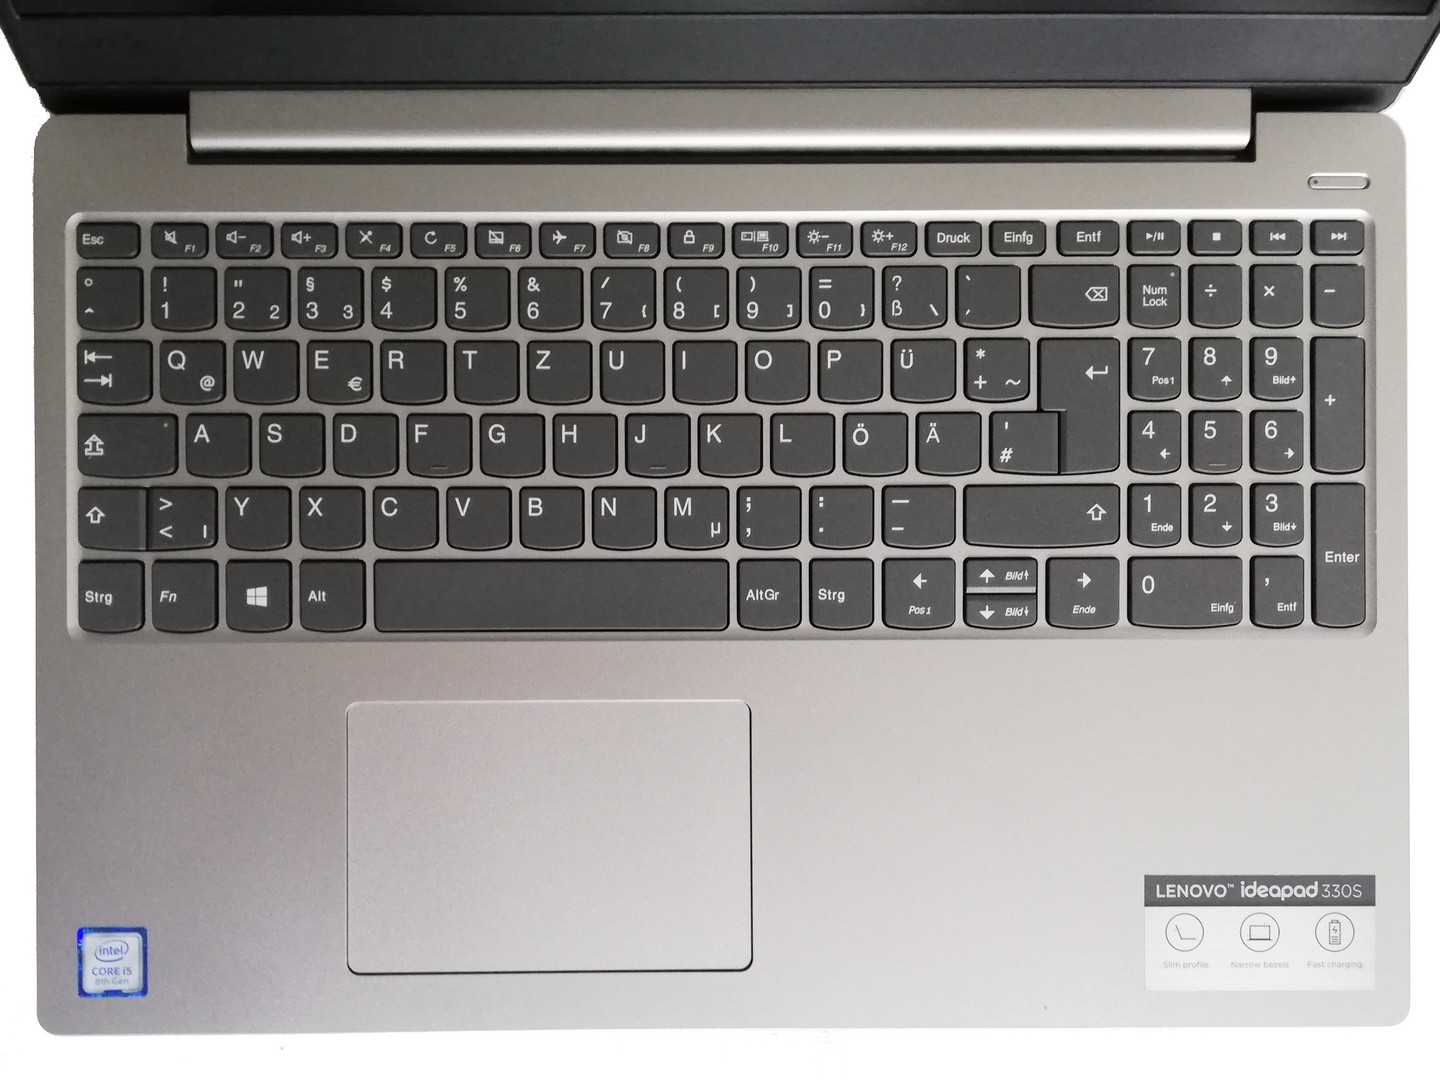 PC/タブレット ノートPC Lenovo IdeaPad 330S-15IKB (i5-8250U, UHD620) Laptop Review 